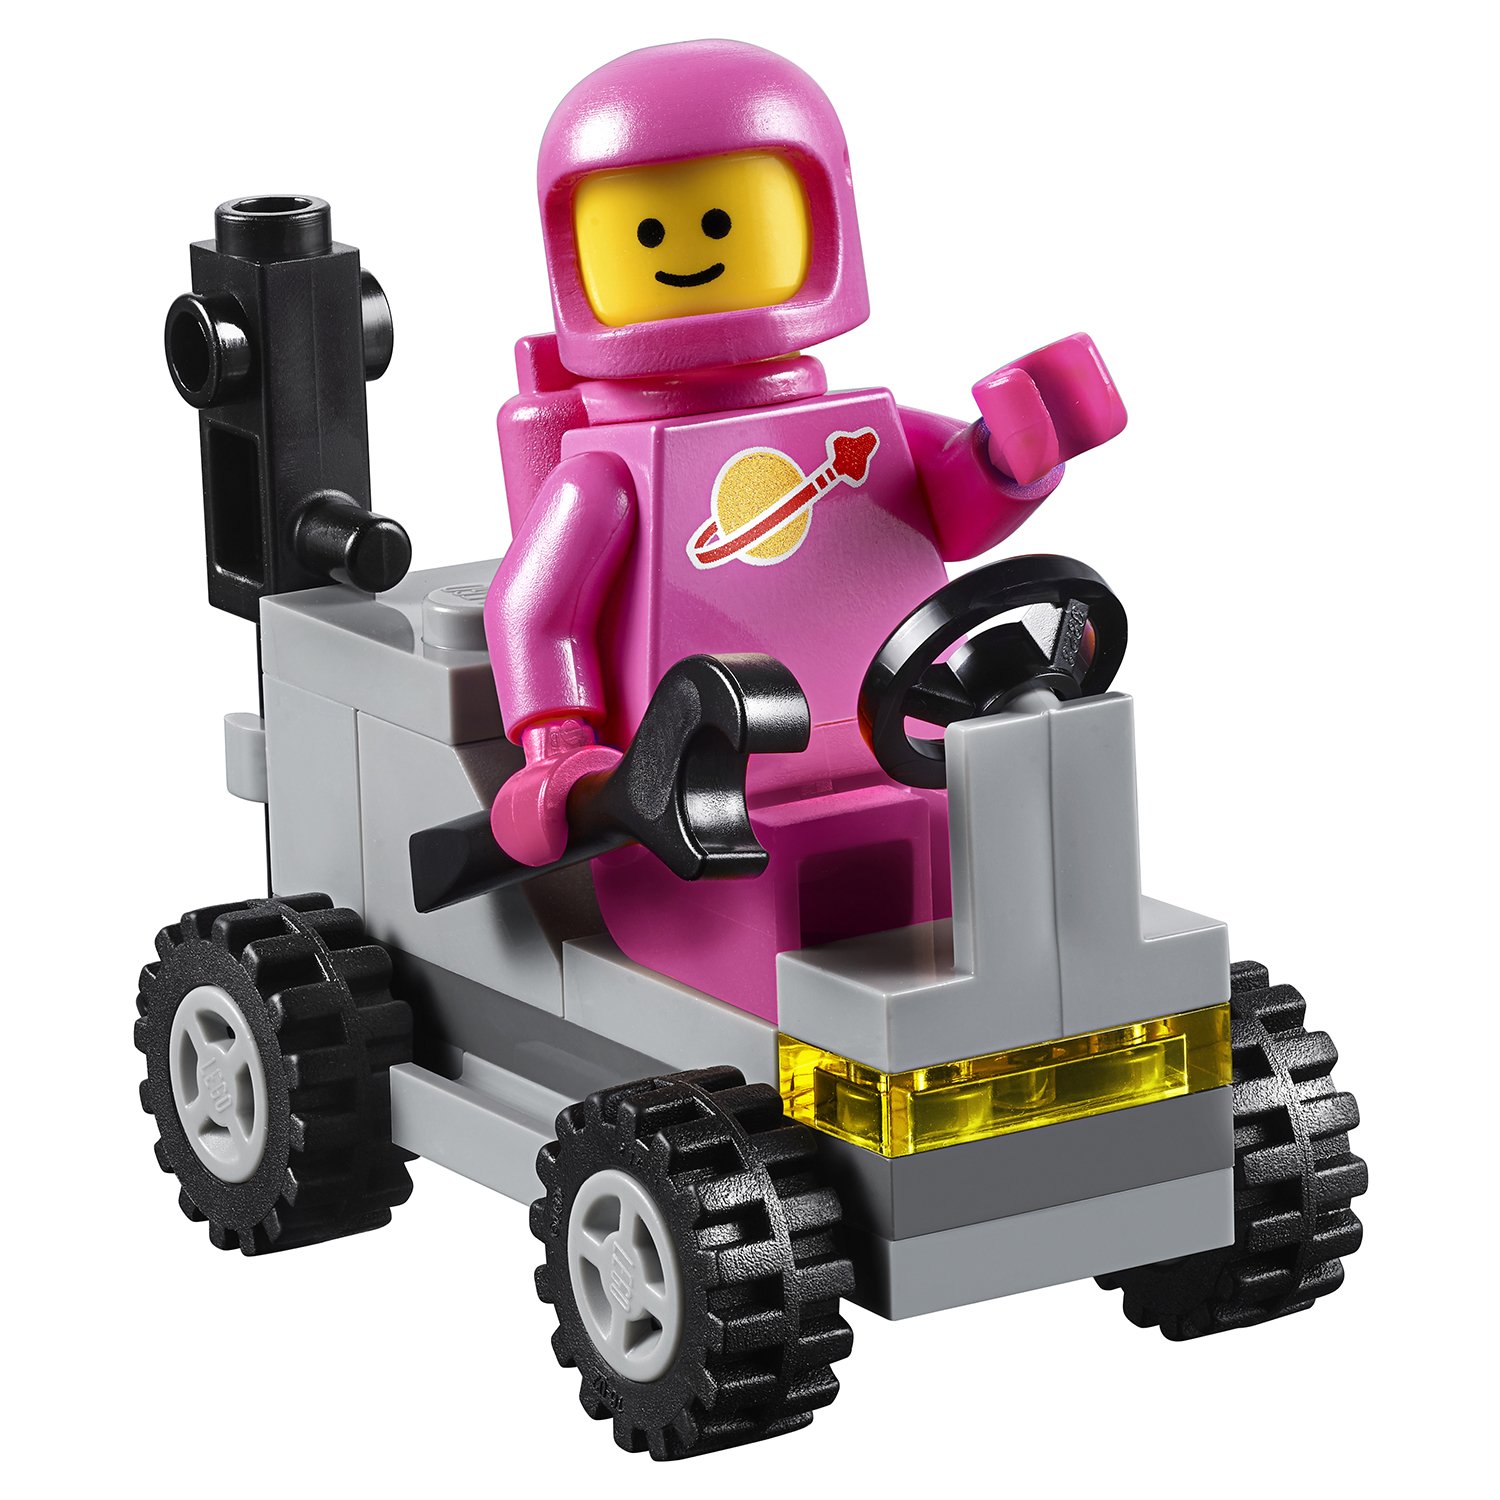 Lego Movie 70841 Космический отряд Бенни